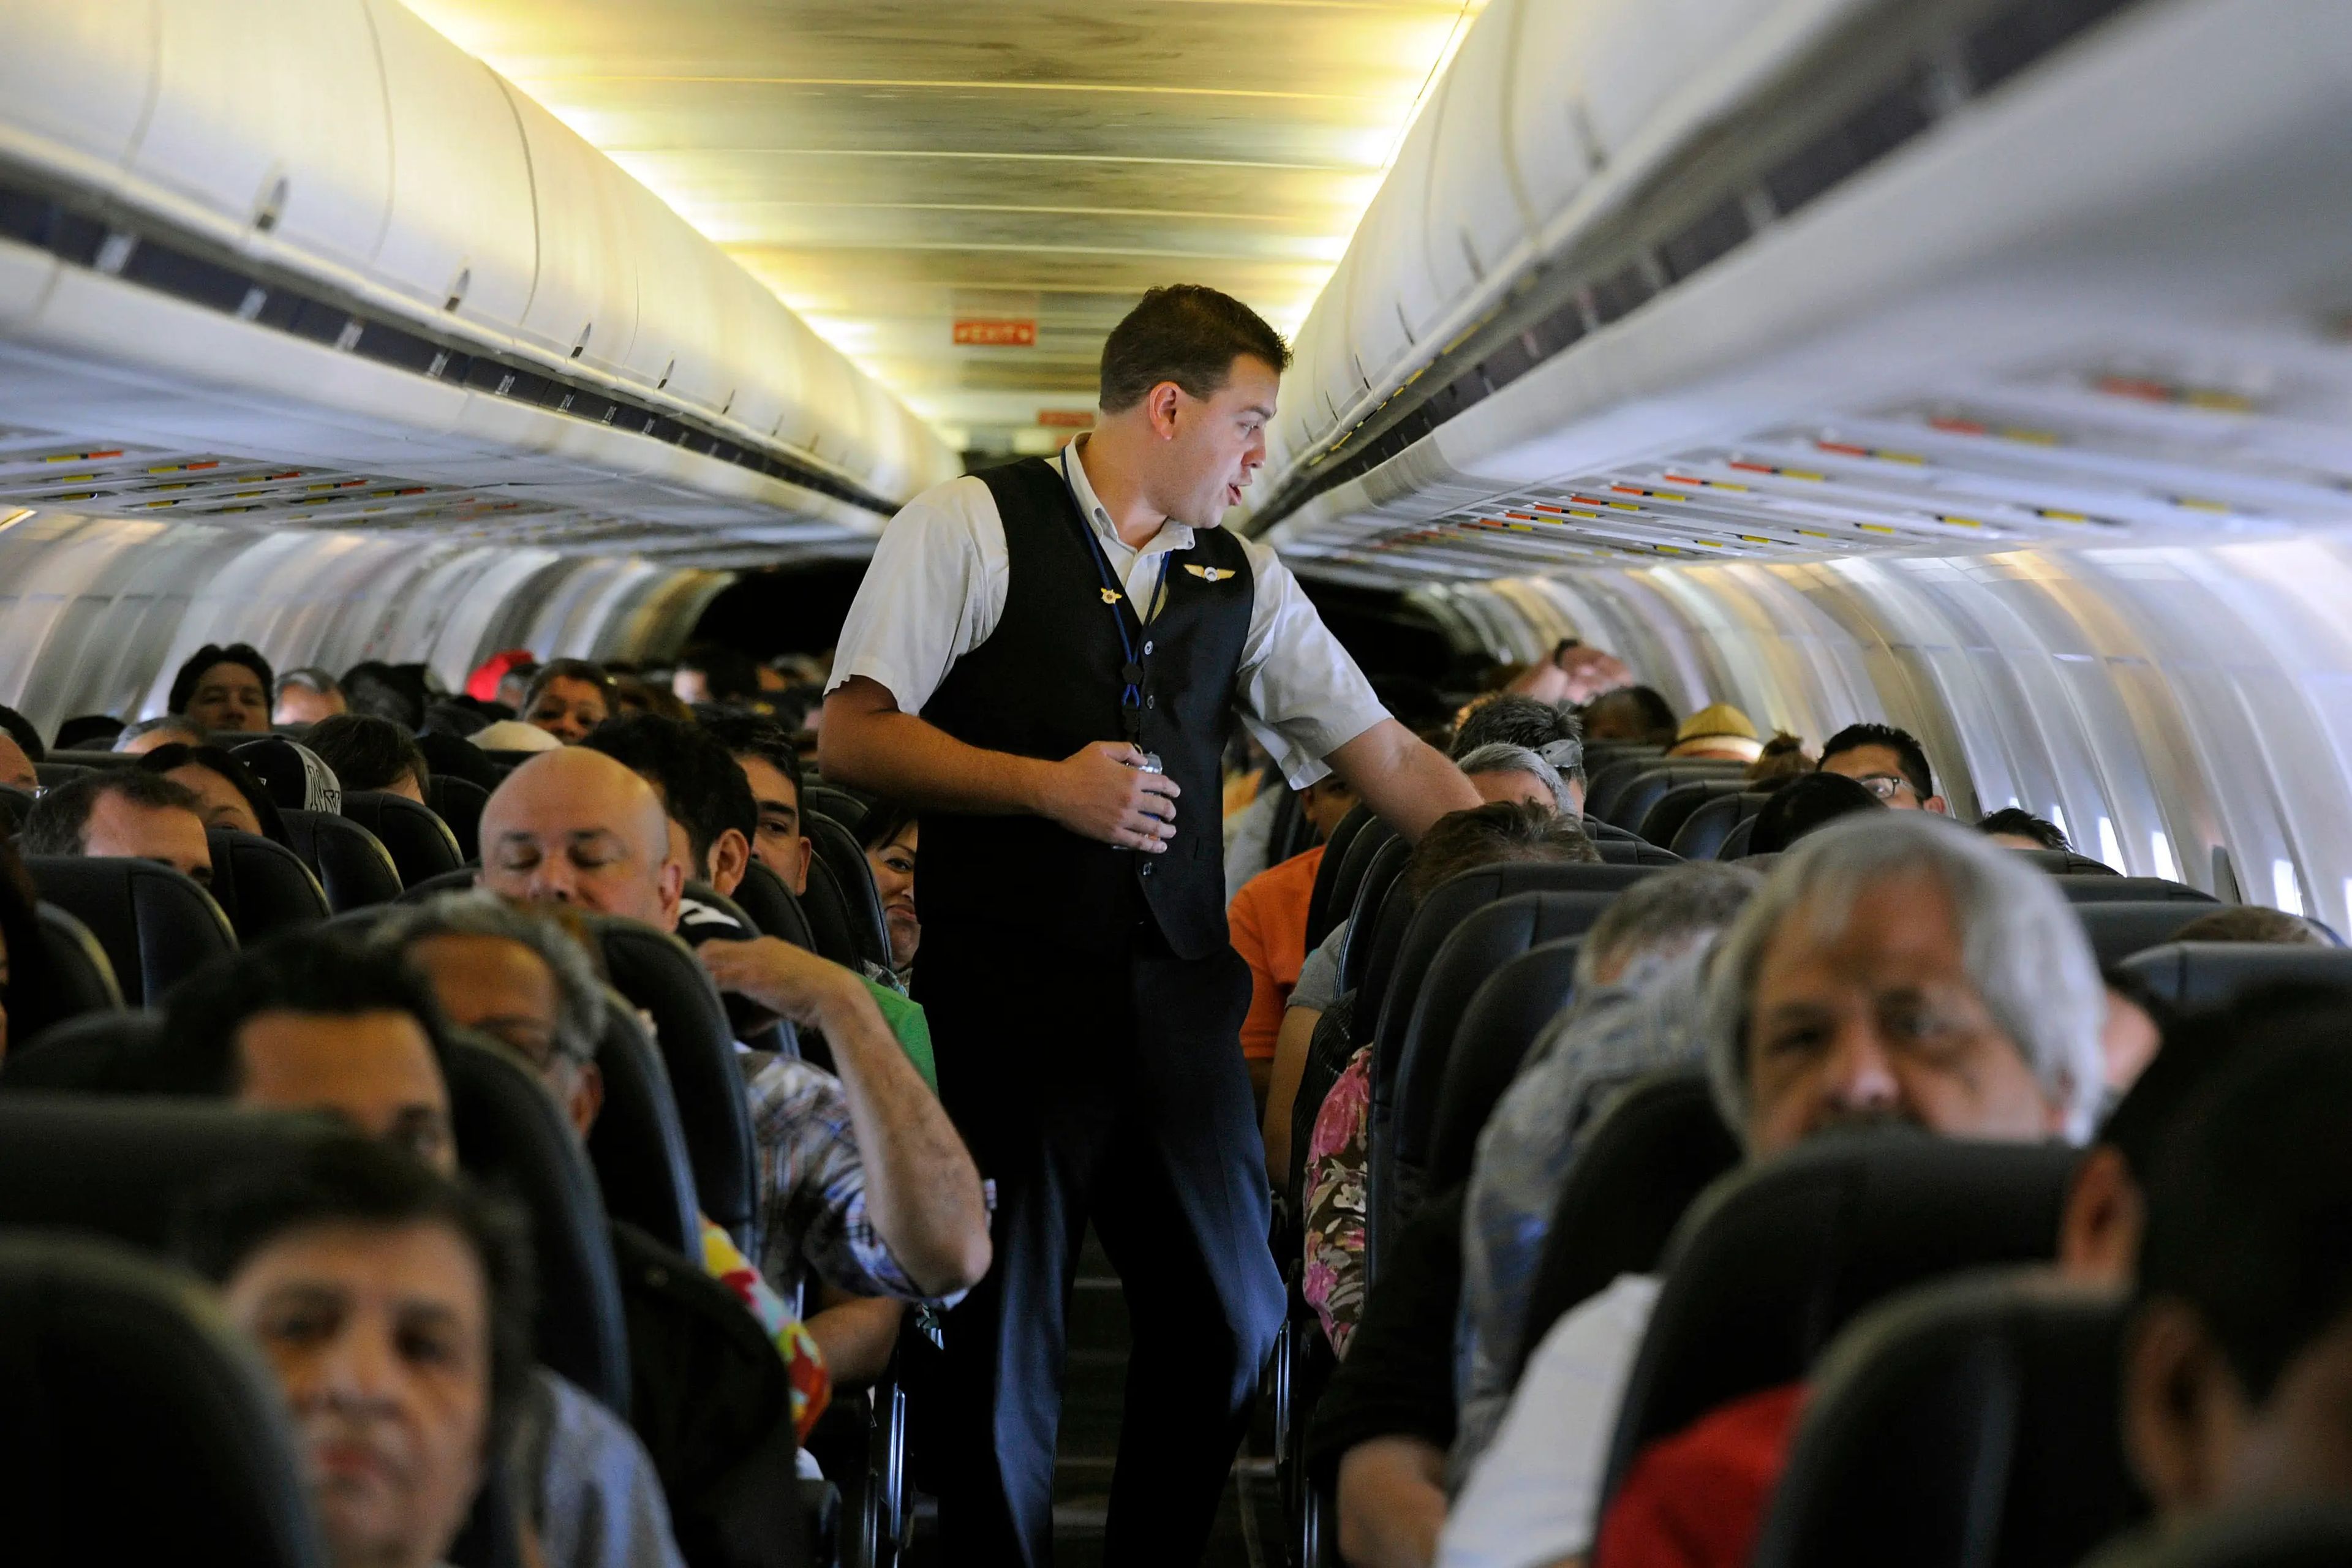 flight attendant walks through aisle